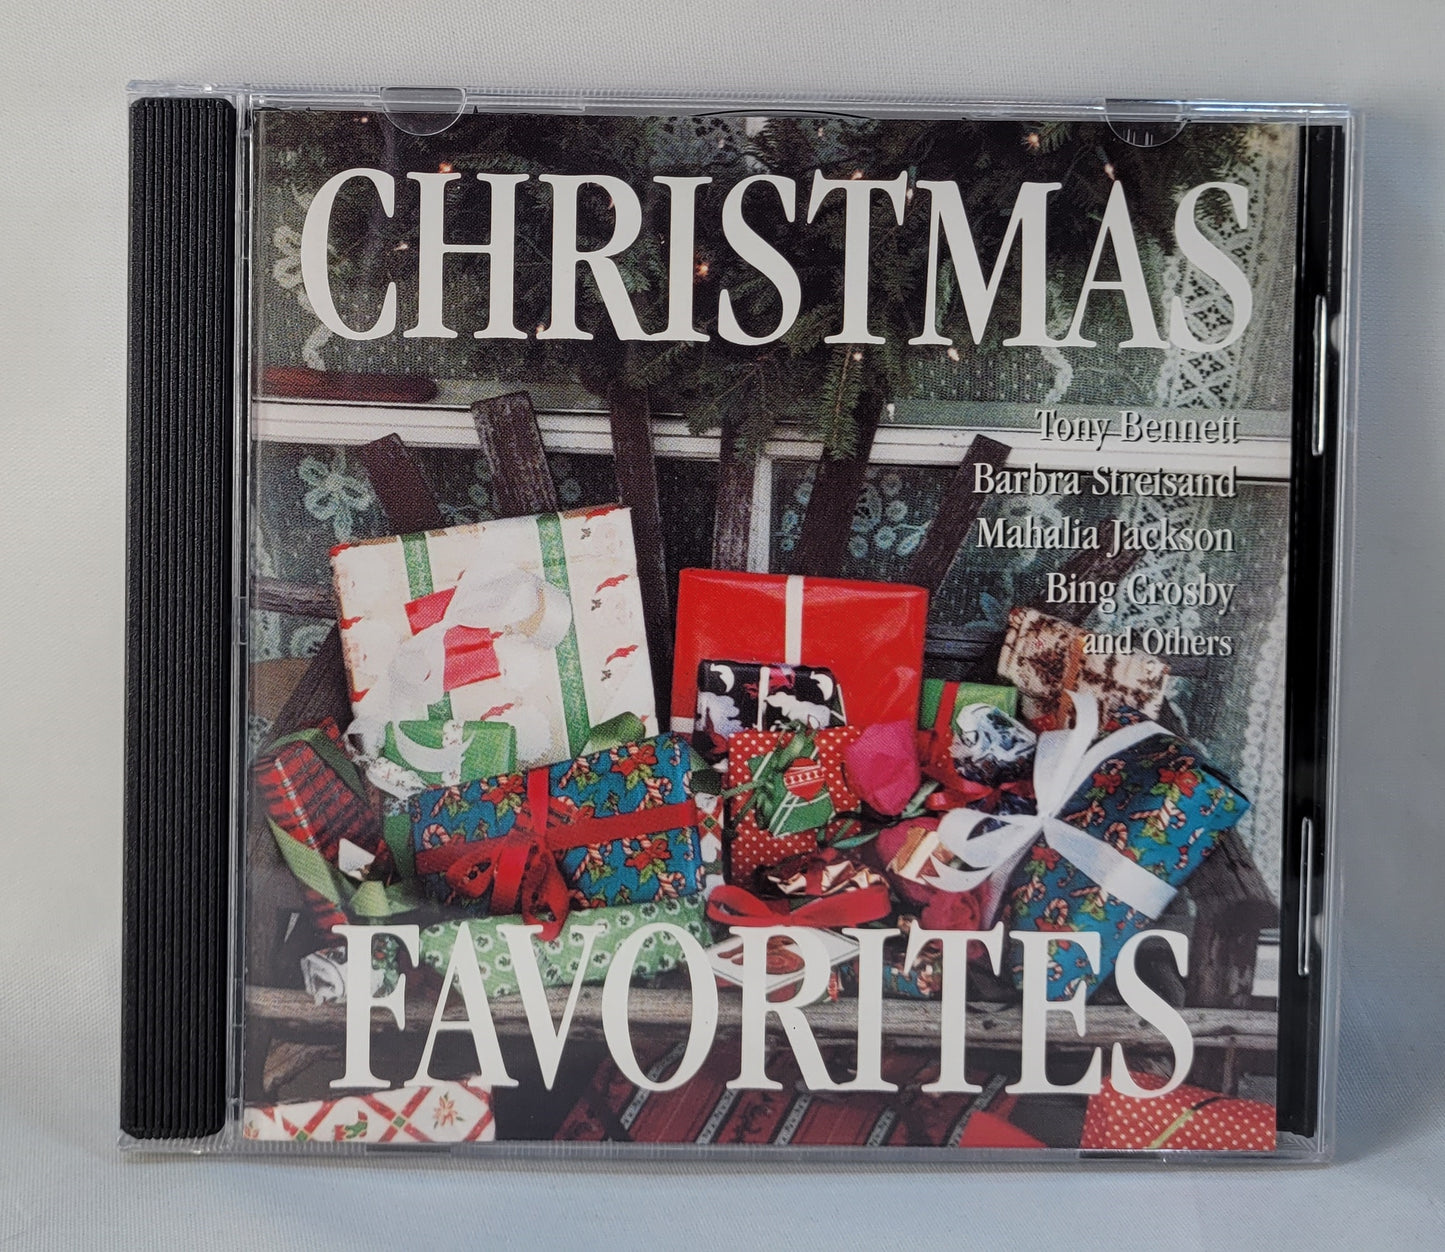 Various - Christmas Favorites [CD]